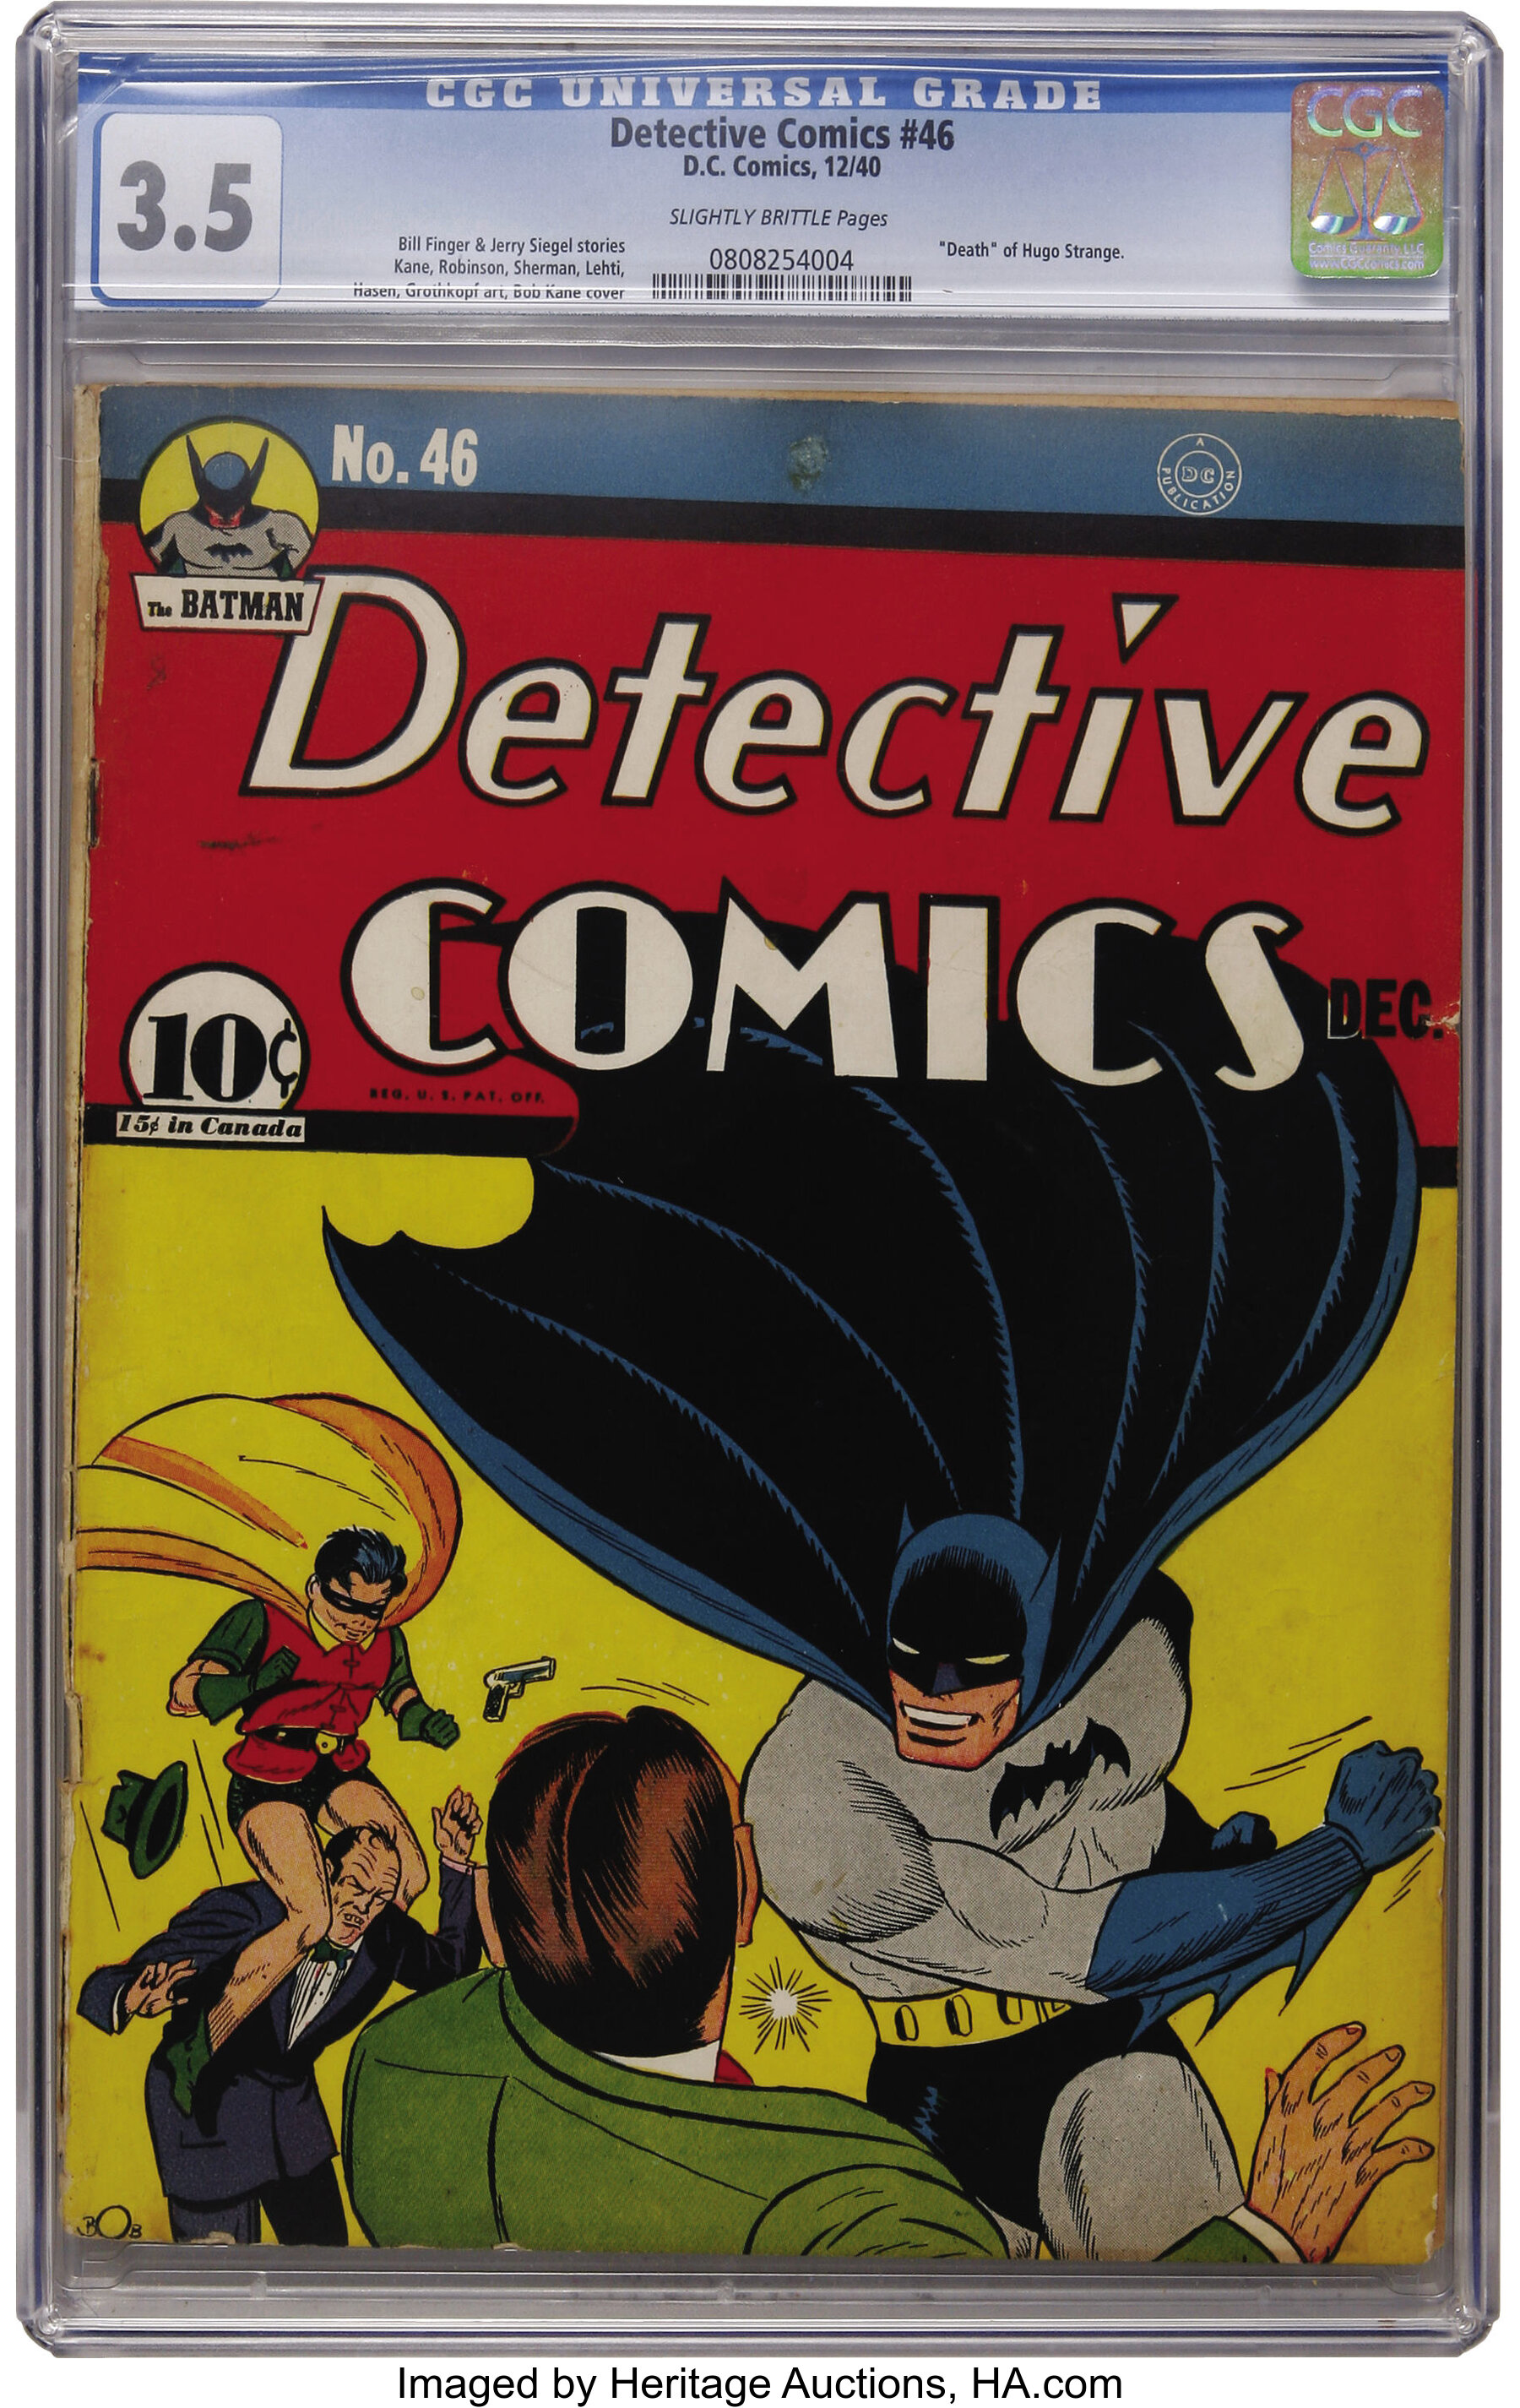 Detective Comics #46 (DC, 1940) CGC VG Slightly brittle | Lot #41163 |  Heritage Auctions